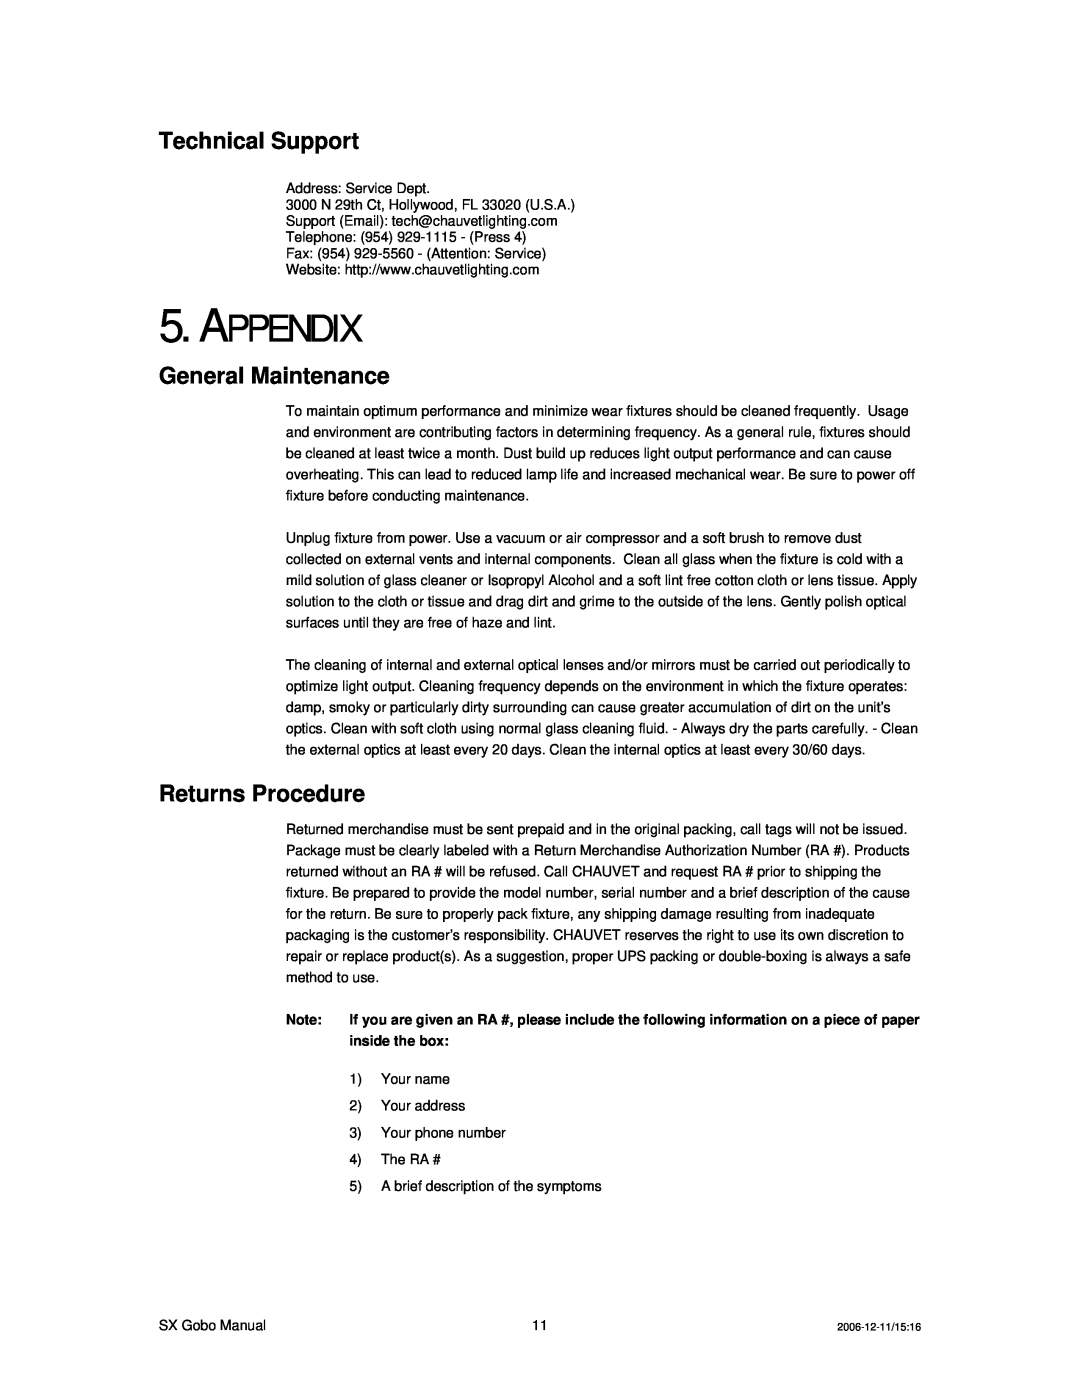 Chauvet DMX512 user manual Appendix, Technical Support, General Maintenance, Returns Procedure, inside the box 